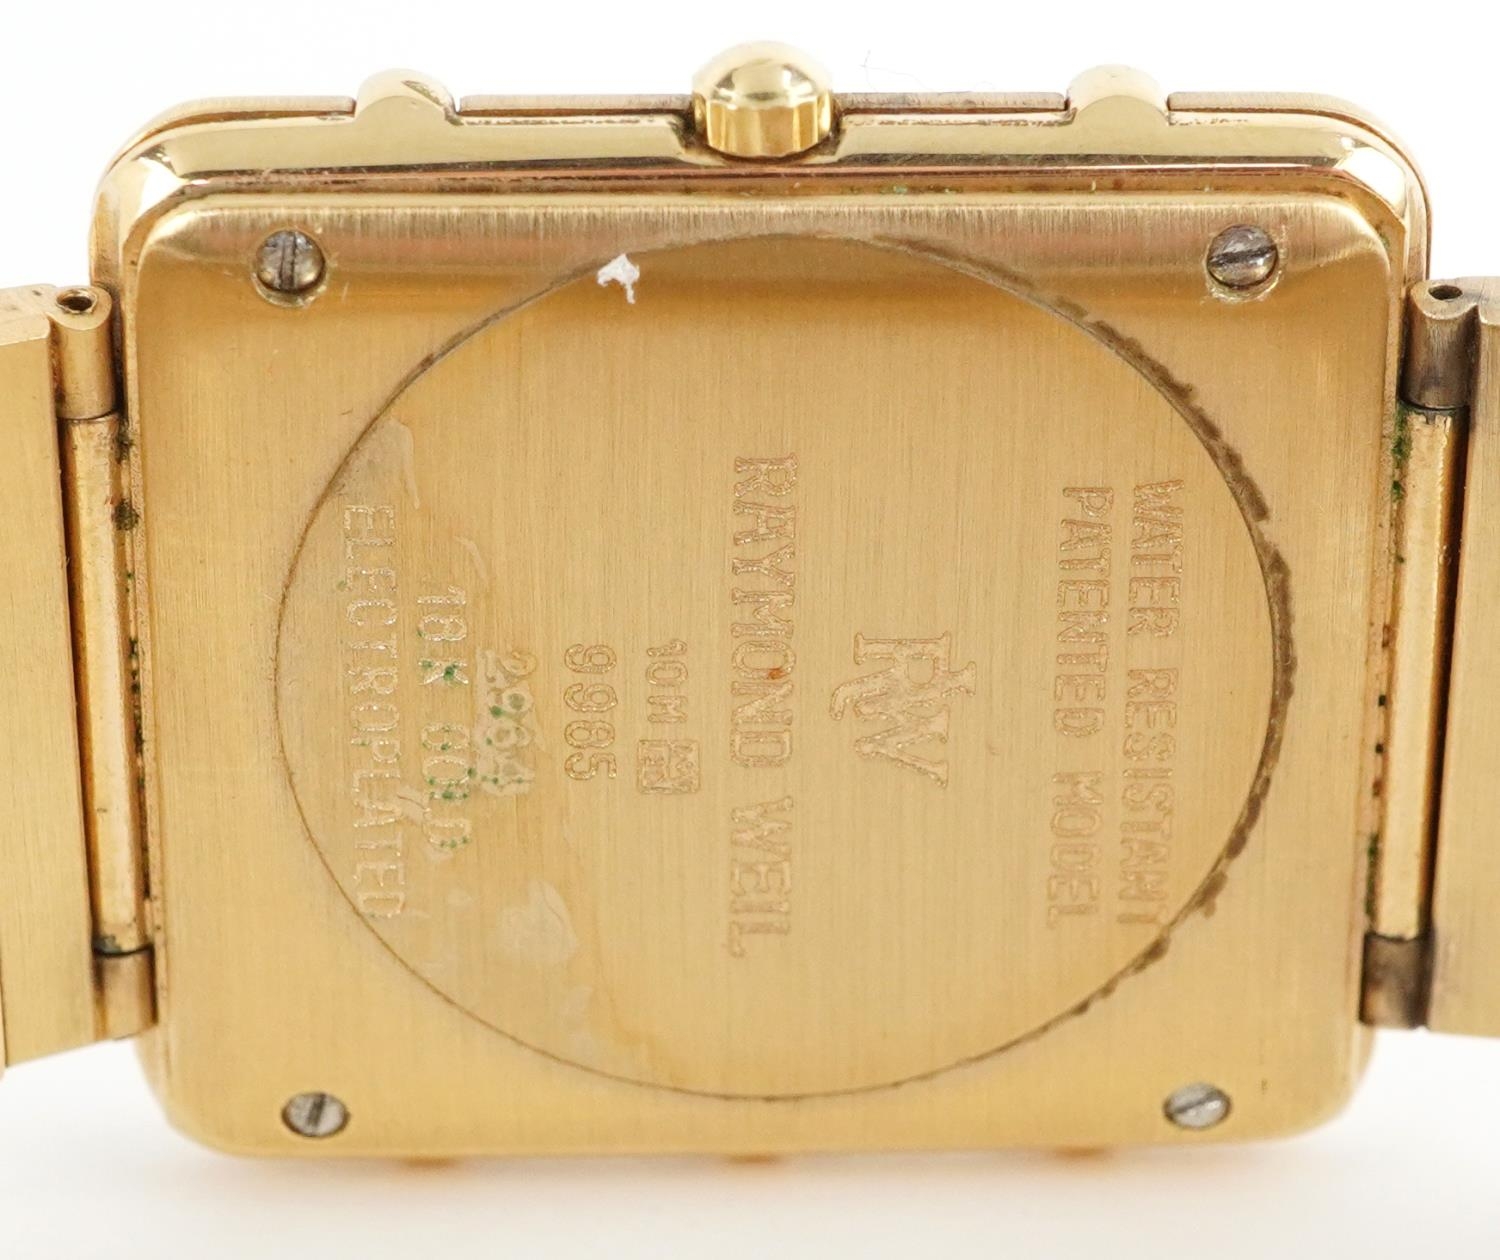 Raymond Weil, gentlemen's 18K gold plated Raymond Weil Colosseum quartz wristwatch with date - Image 4 of 7